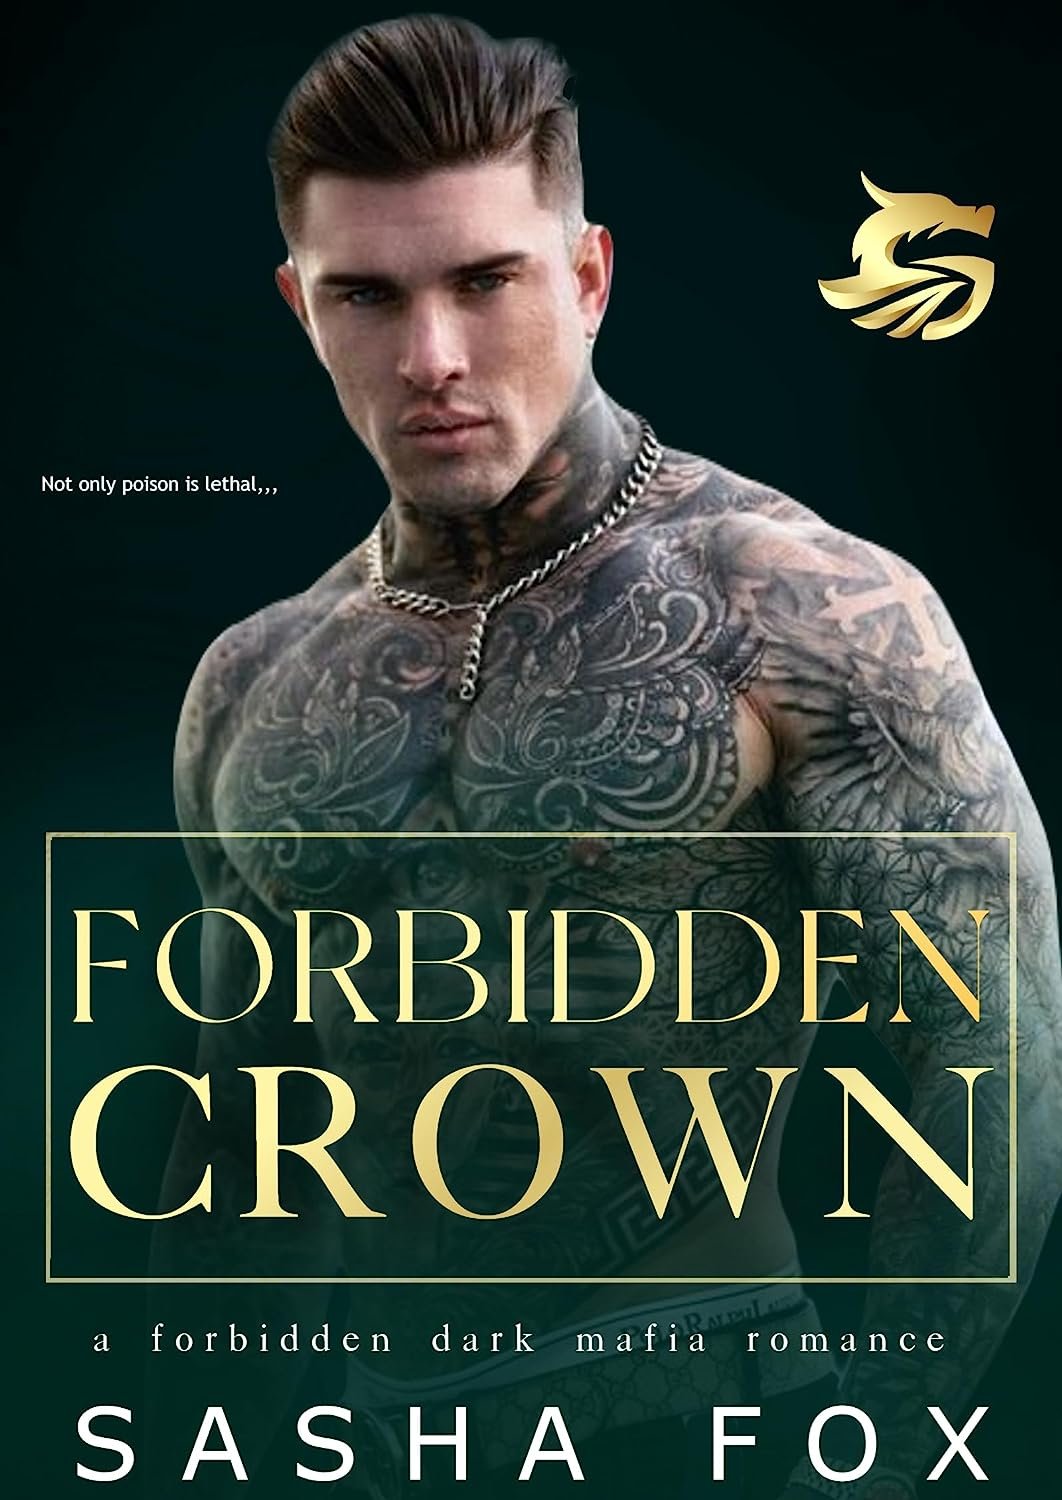 Sasha Fox - Forbidden Crown: Une Romance Mafieuse Sombre